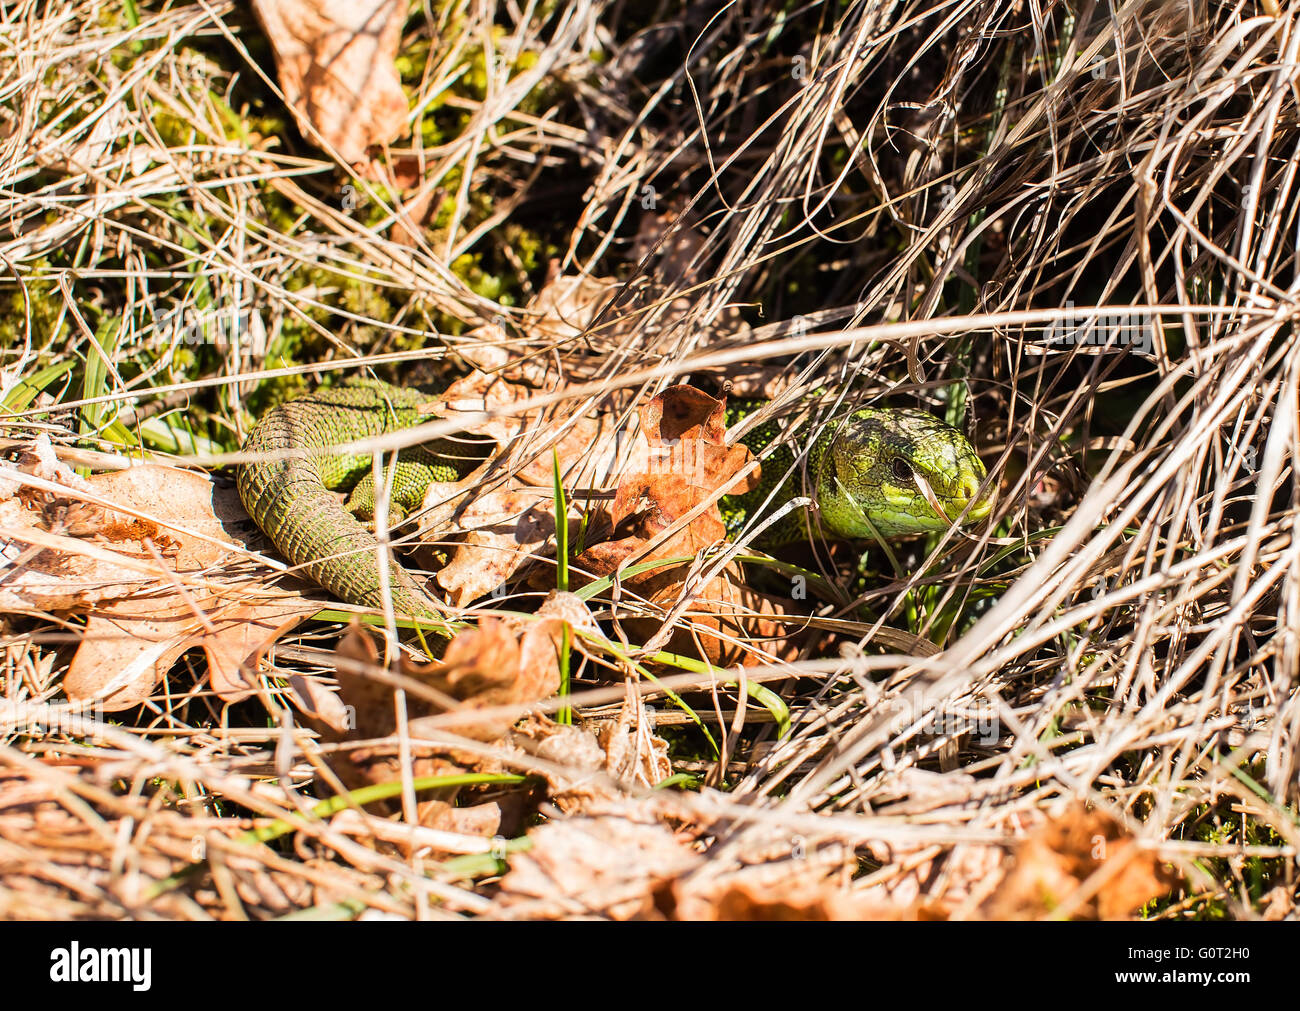 Small green lizard hiding in the grass. Stock Photo